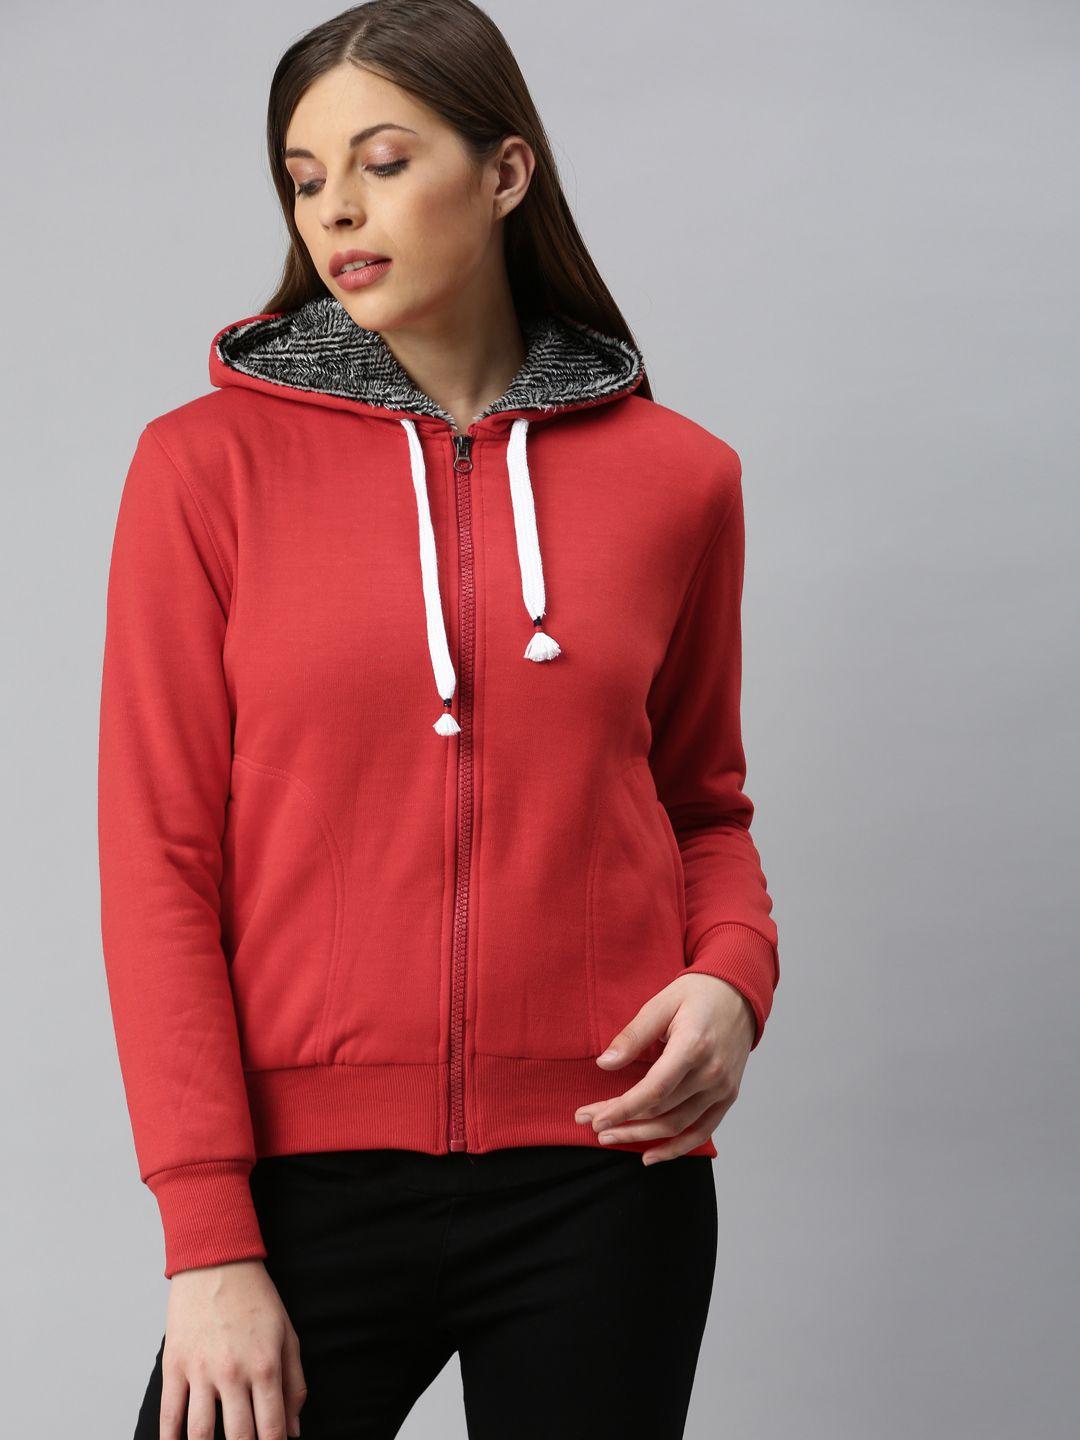 adbucks women red solid hooded sweatshirt